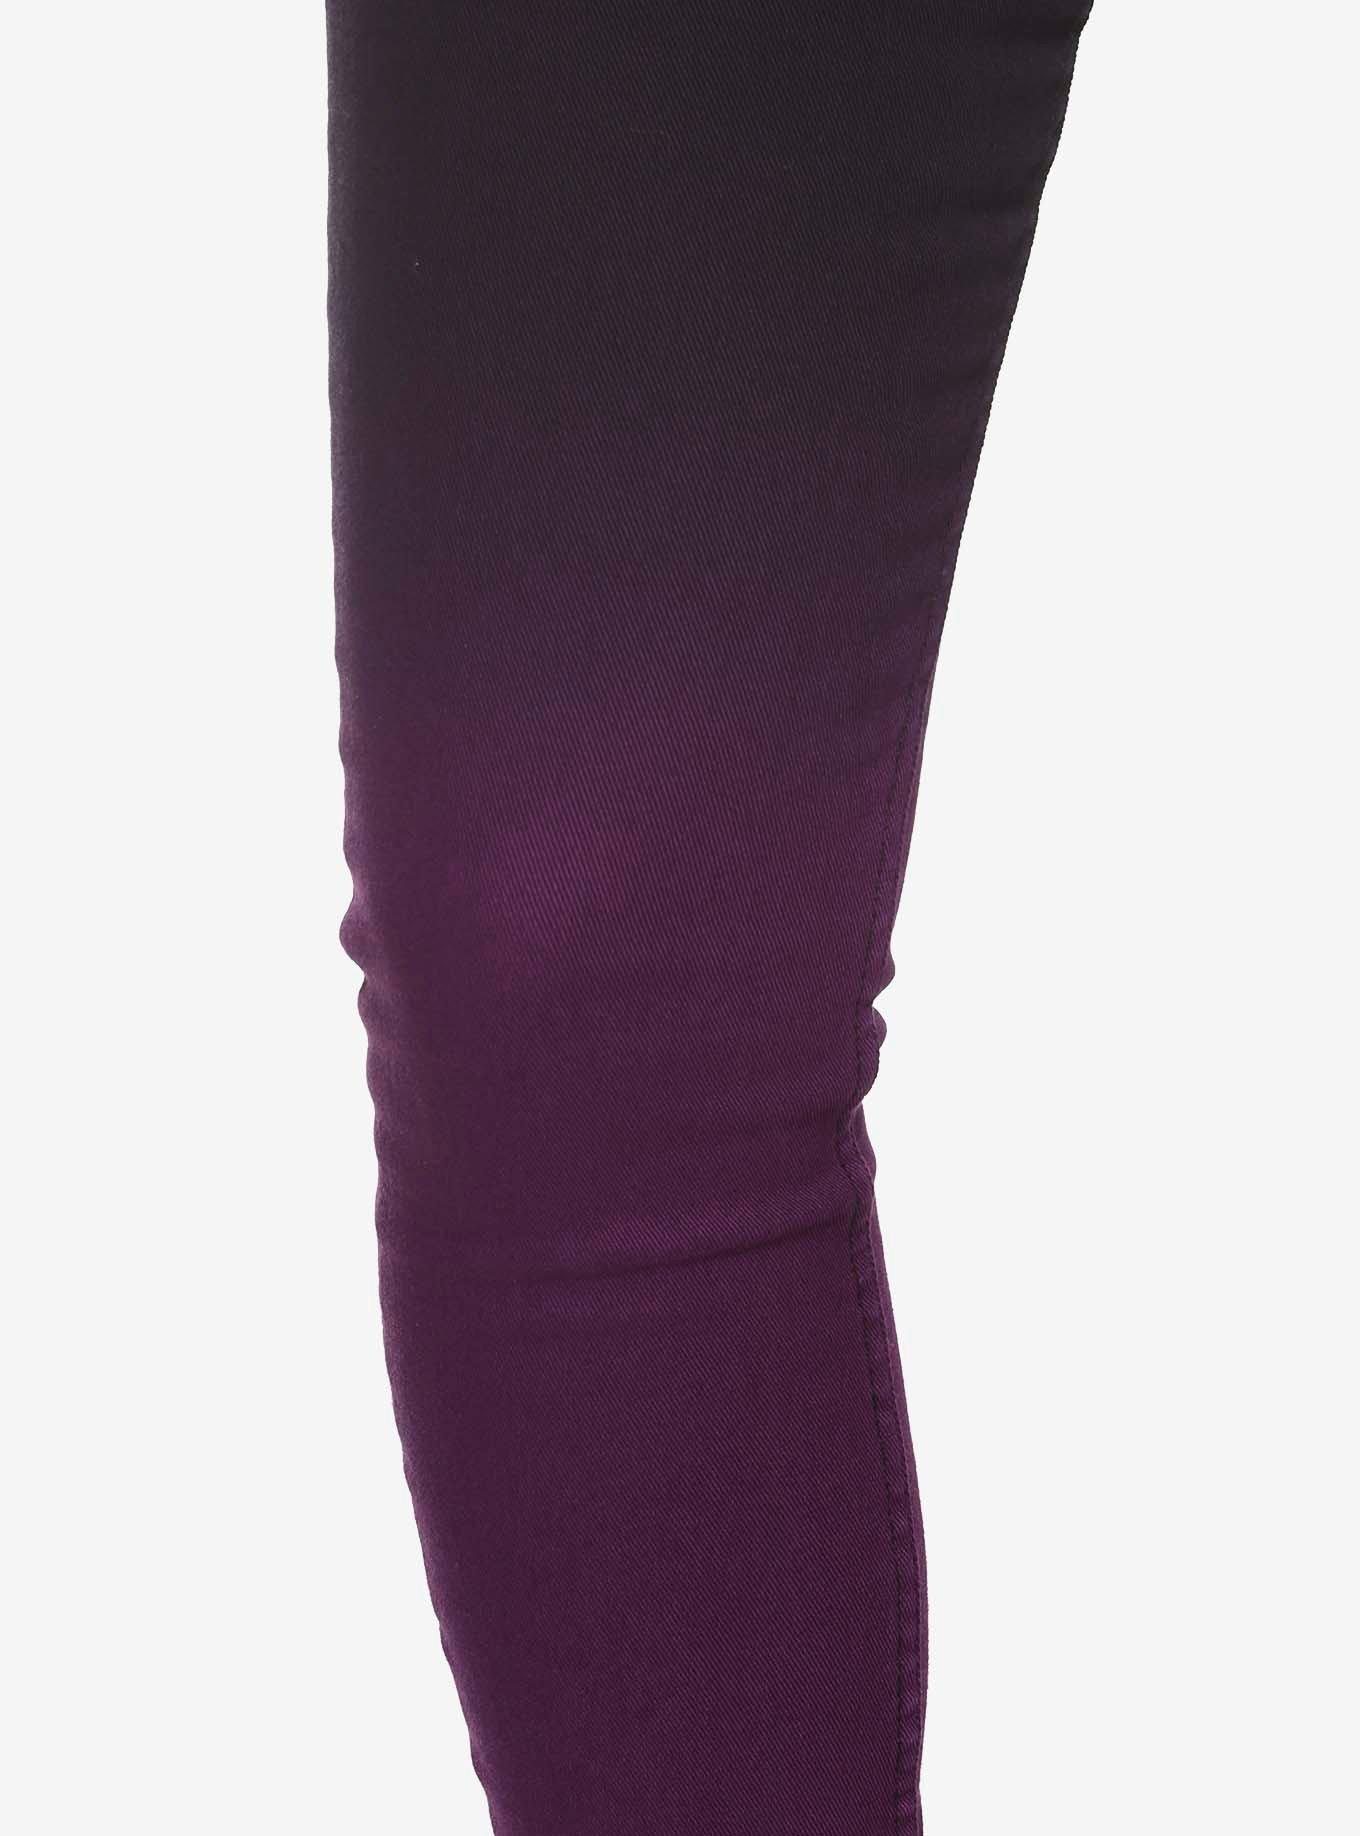 HT Denim Purple Ombre Low-Rise Skinny Jeans, PURPLE, alternate